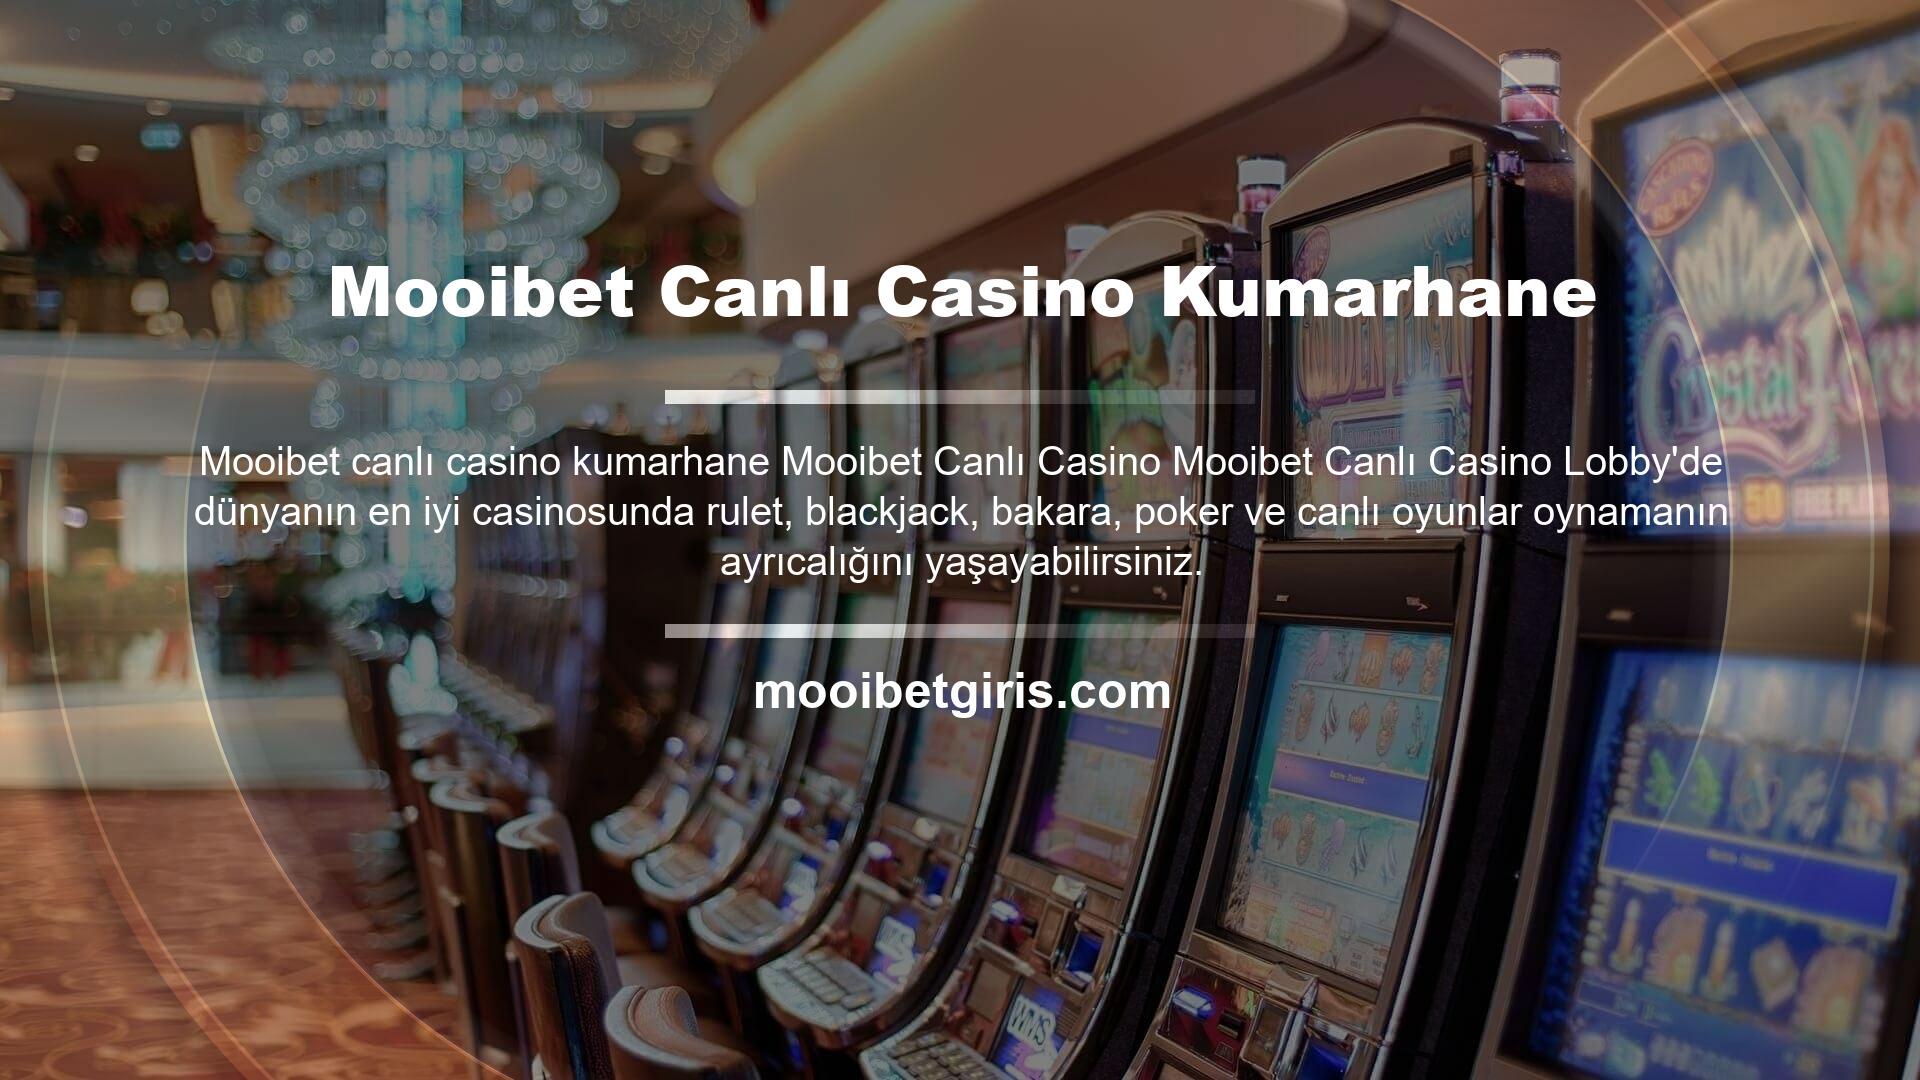 Mooibet Canlı Casino Kumarhane